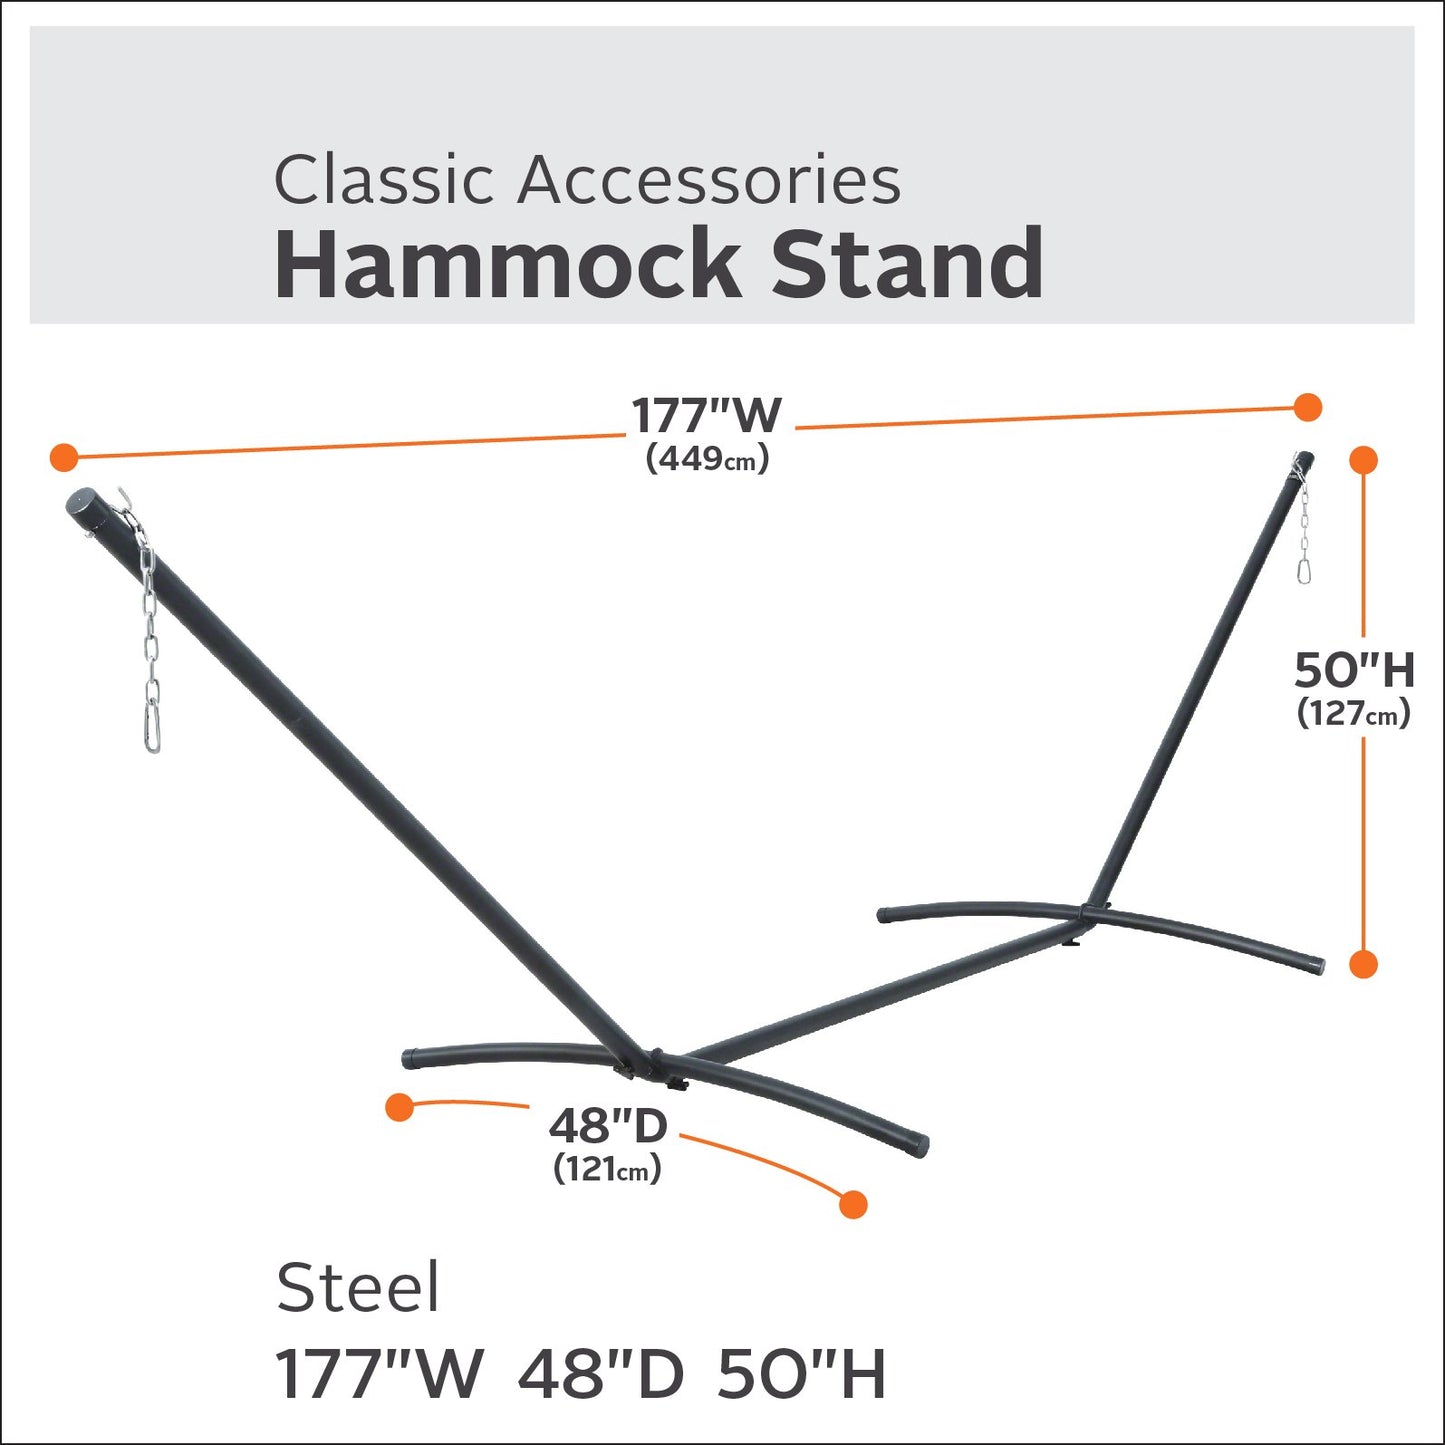 Steel Hammock Stand - Classic Accessories